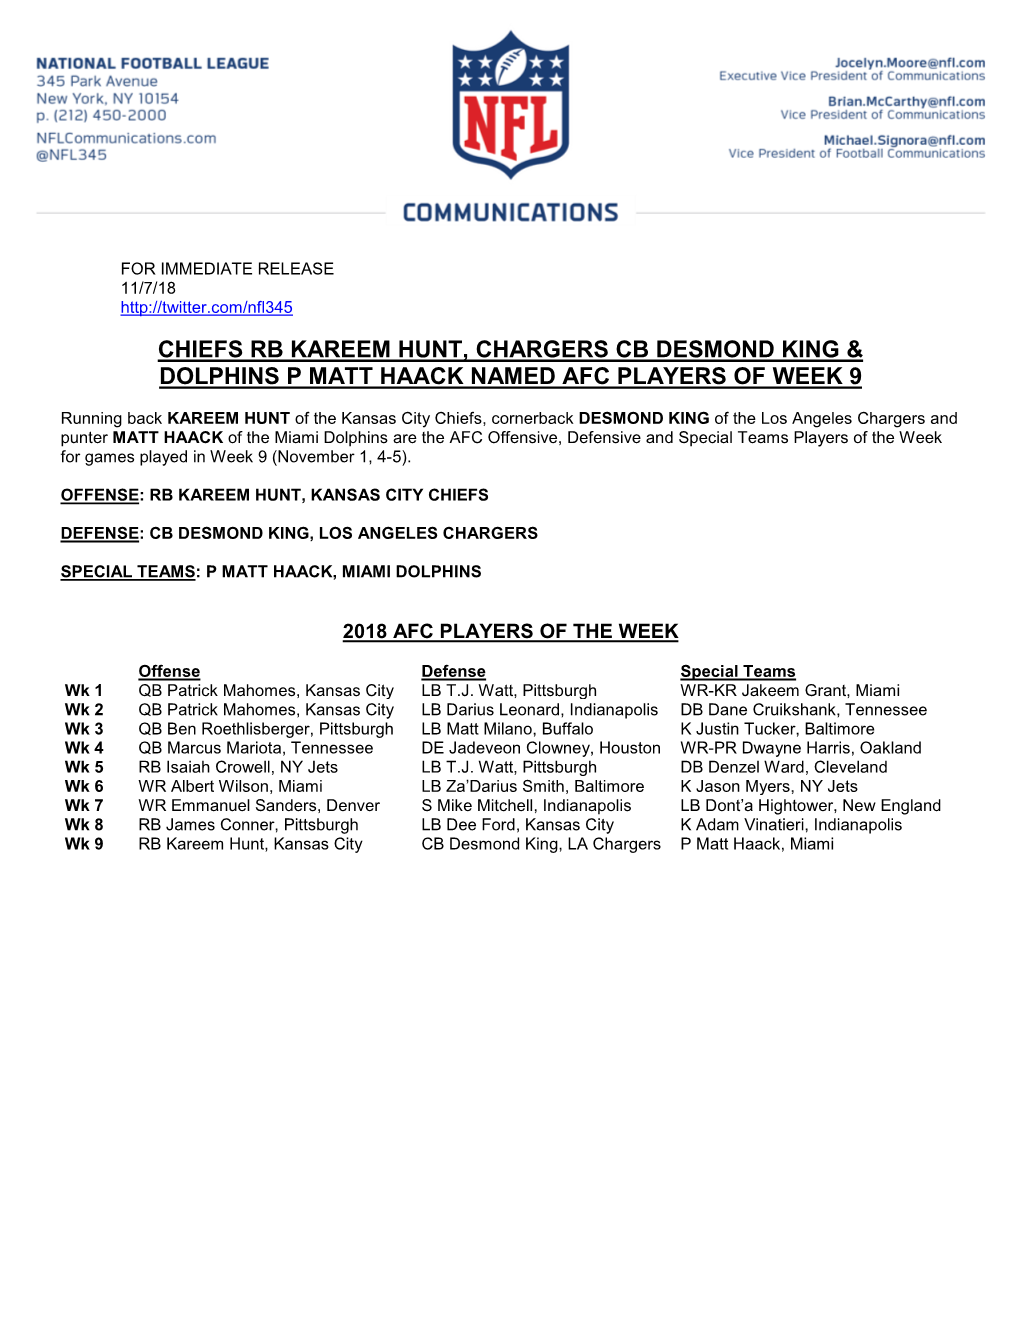 Chiefs Rb Kareem Hunt, Chargers Cb Desmond King & Dolphins P Matt Haack Named Afc Players of Week 9